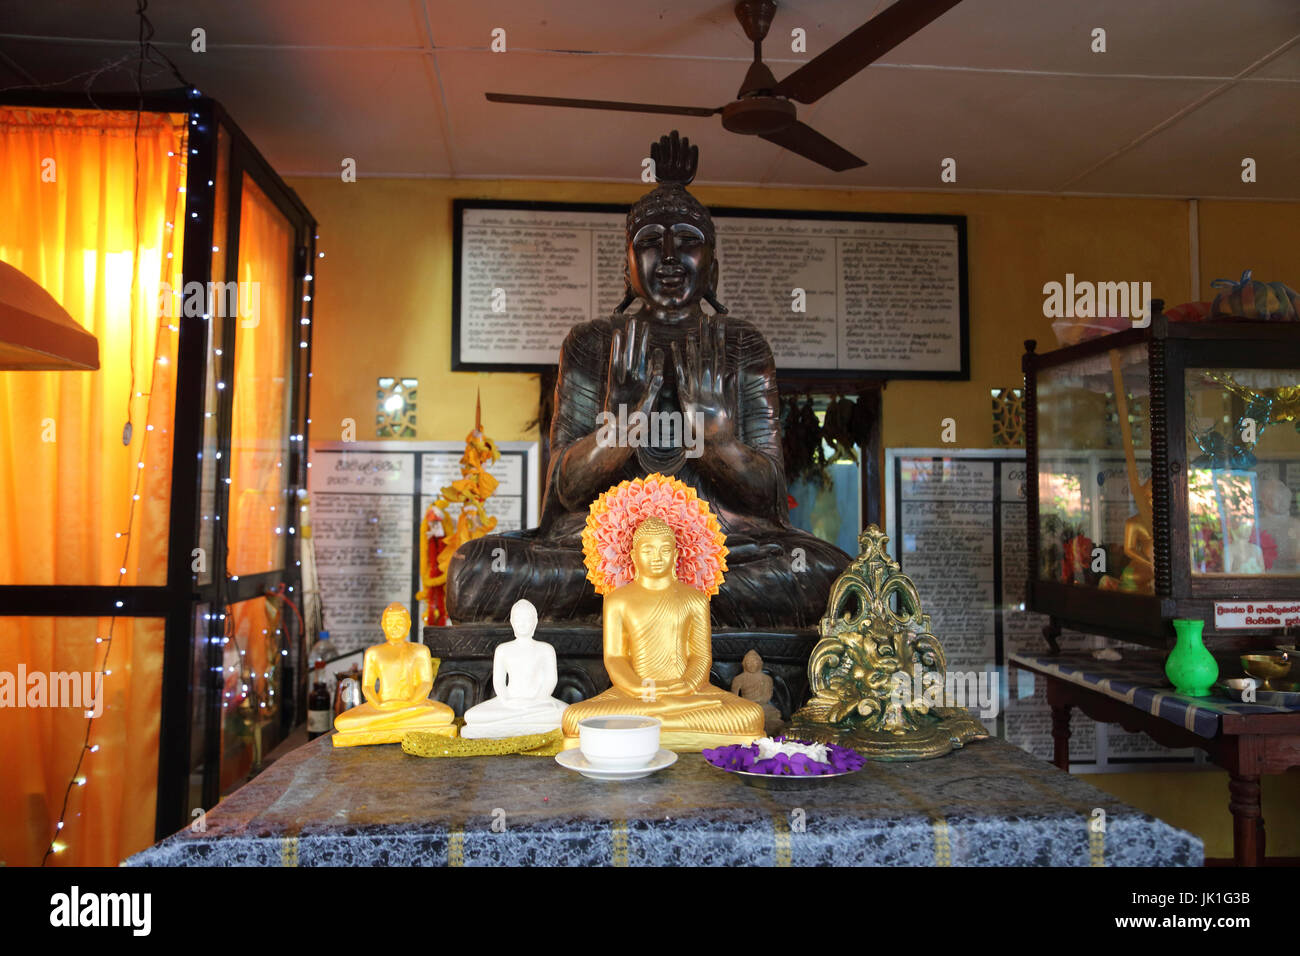 Galle Sri Lanka Sri-Vivekaramaya Rumassala Road Temple Statue de Bouddha avec la main gauche en Vitarka mudra Geste de Discussion Banque D'Images